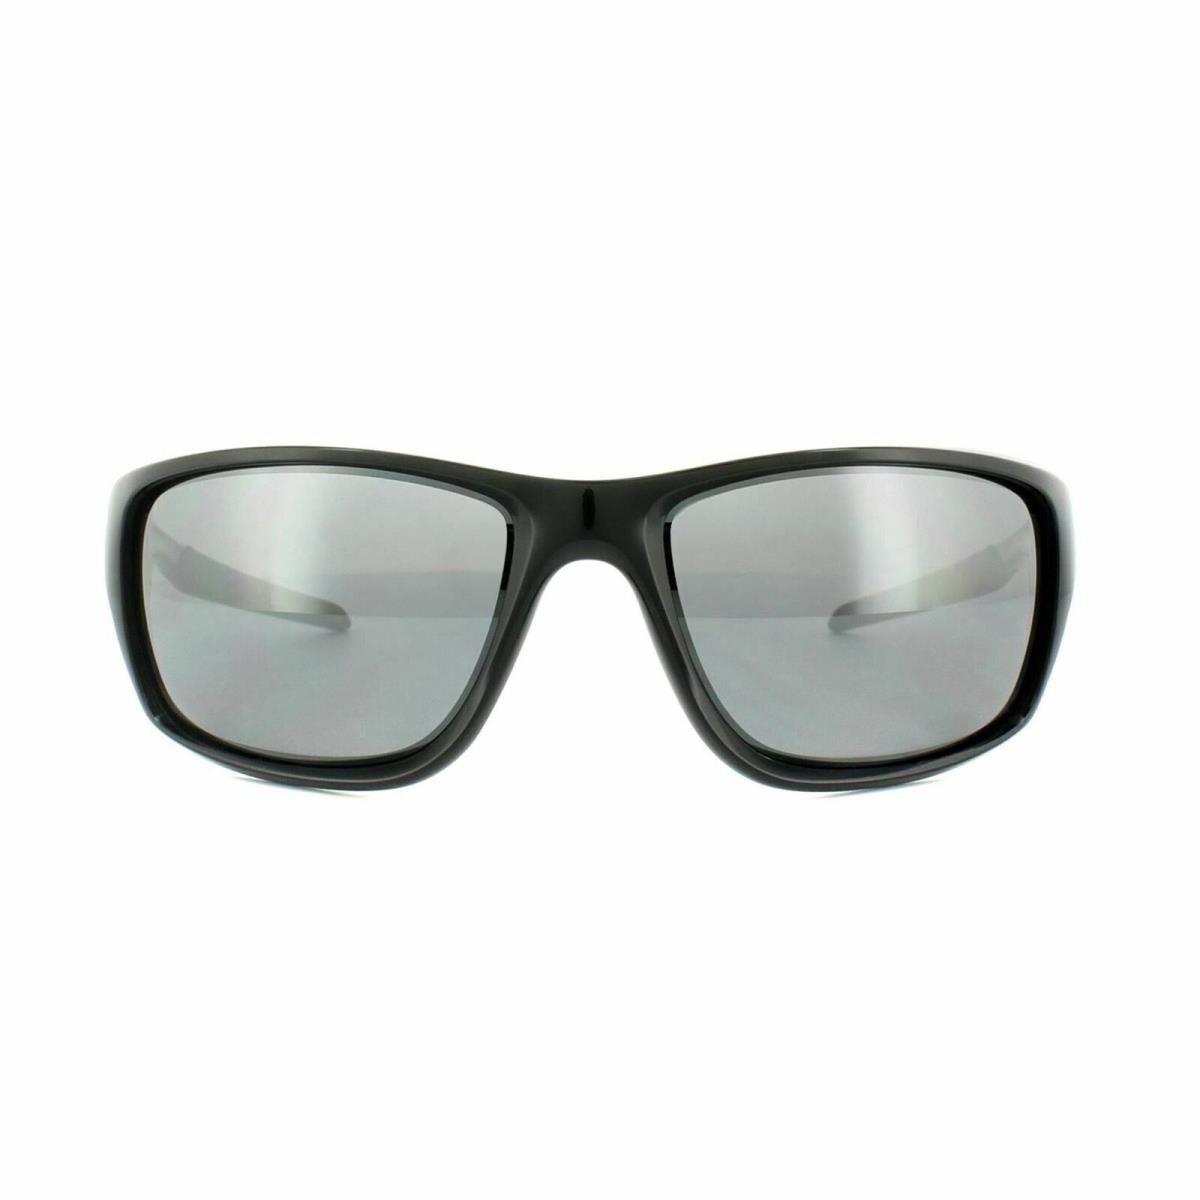 OO9225-01 Mens Oakley Canteen Polarized Sunglasses - Black/black Iridium